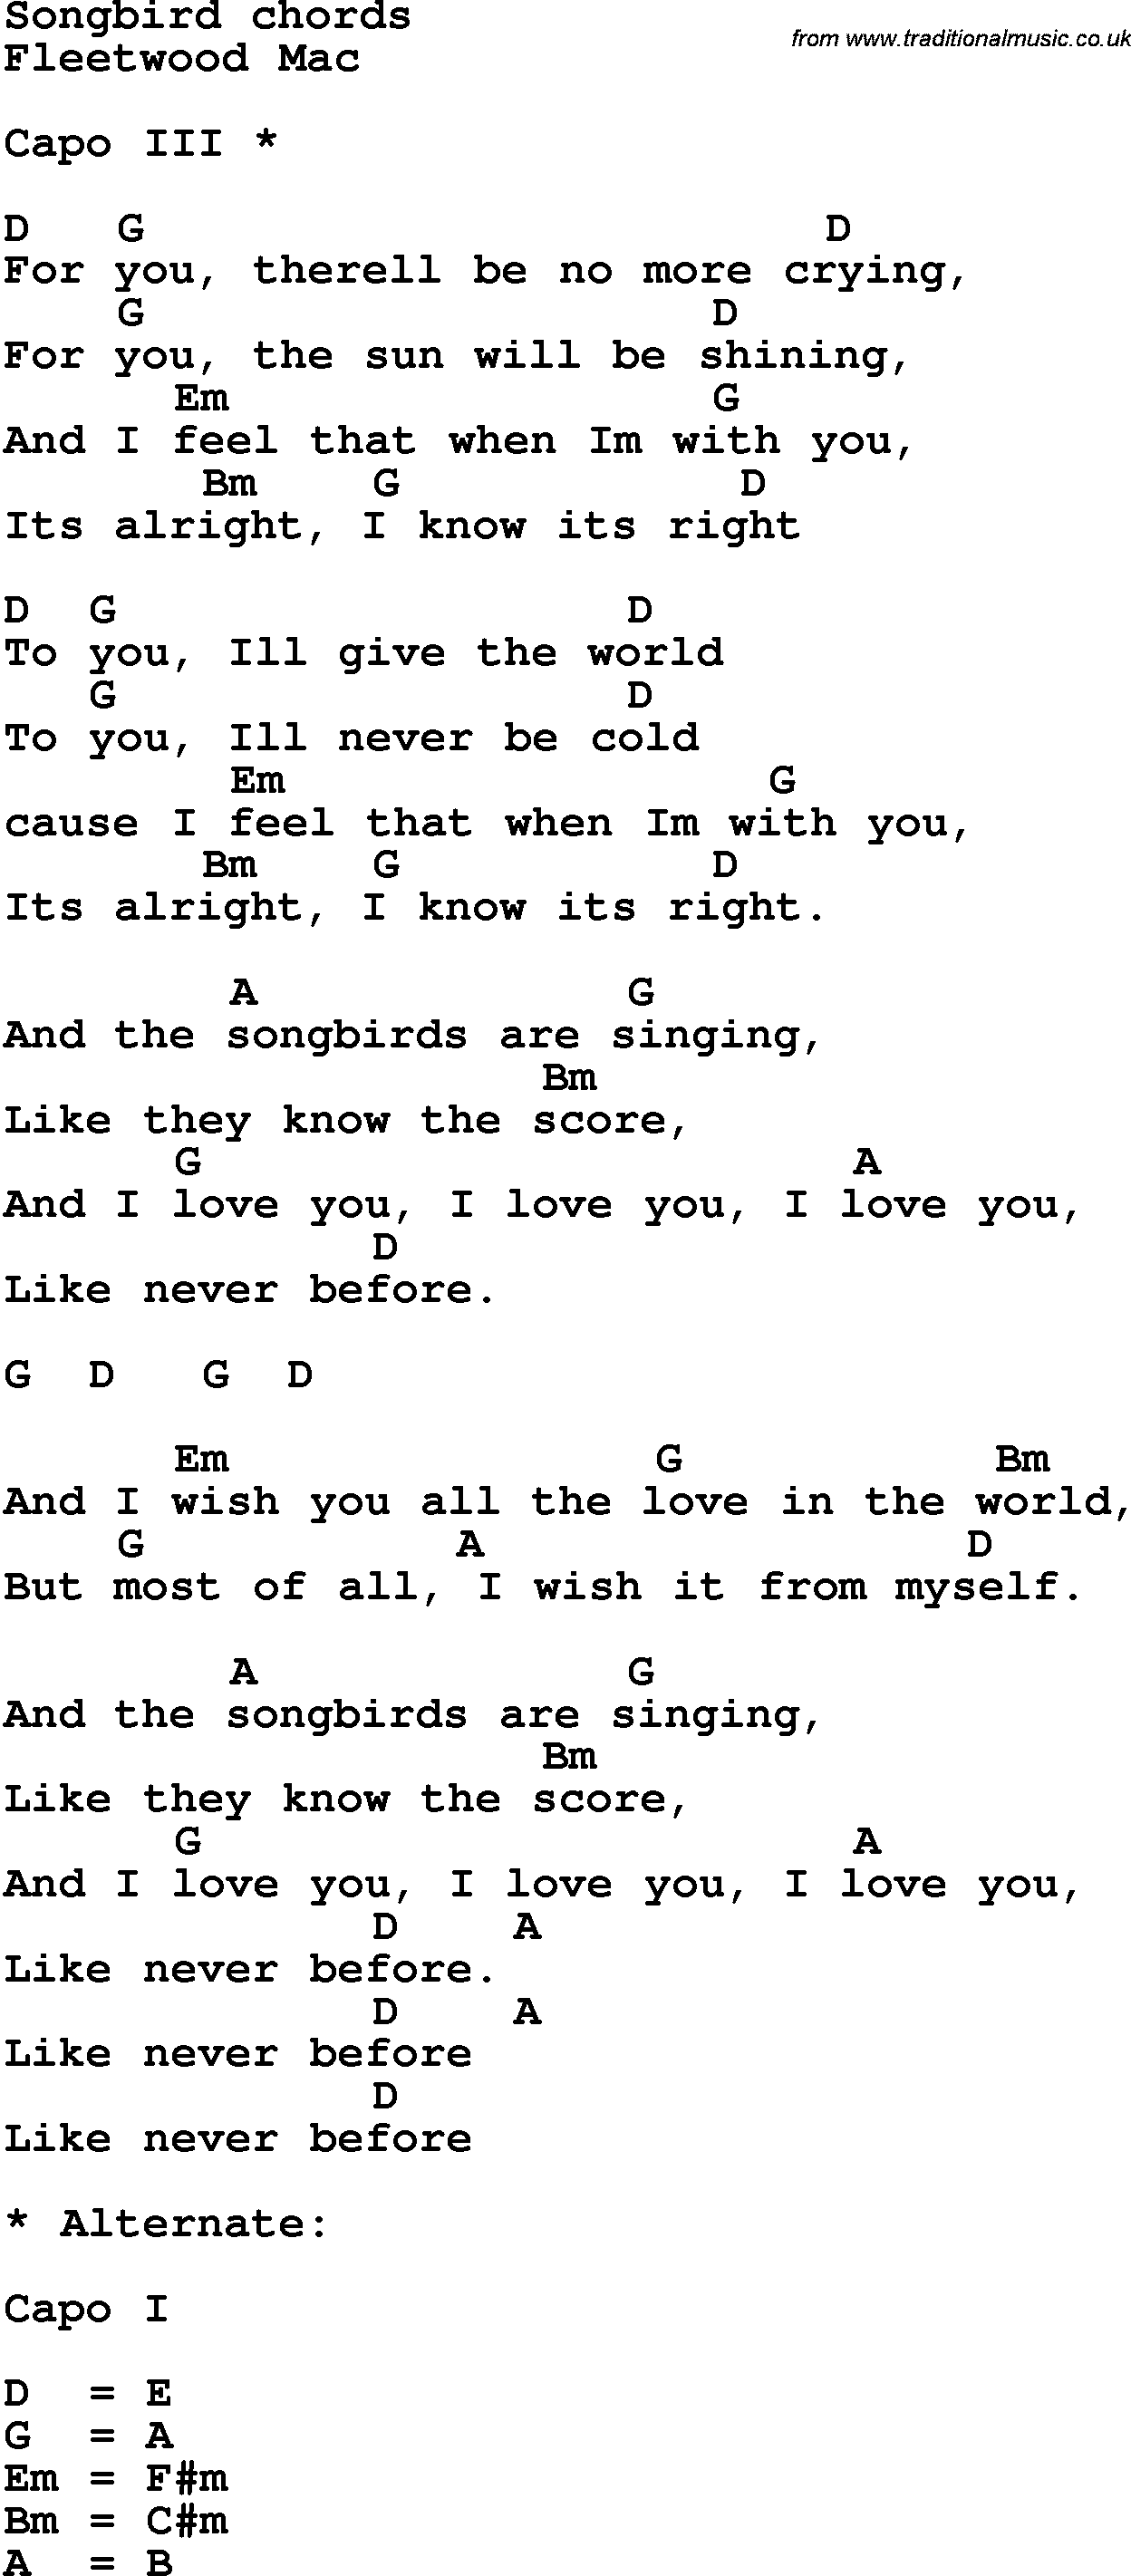 Song Lyrics with guitar chords for Songbird - Fleetwood Mac